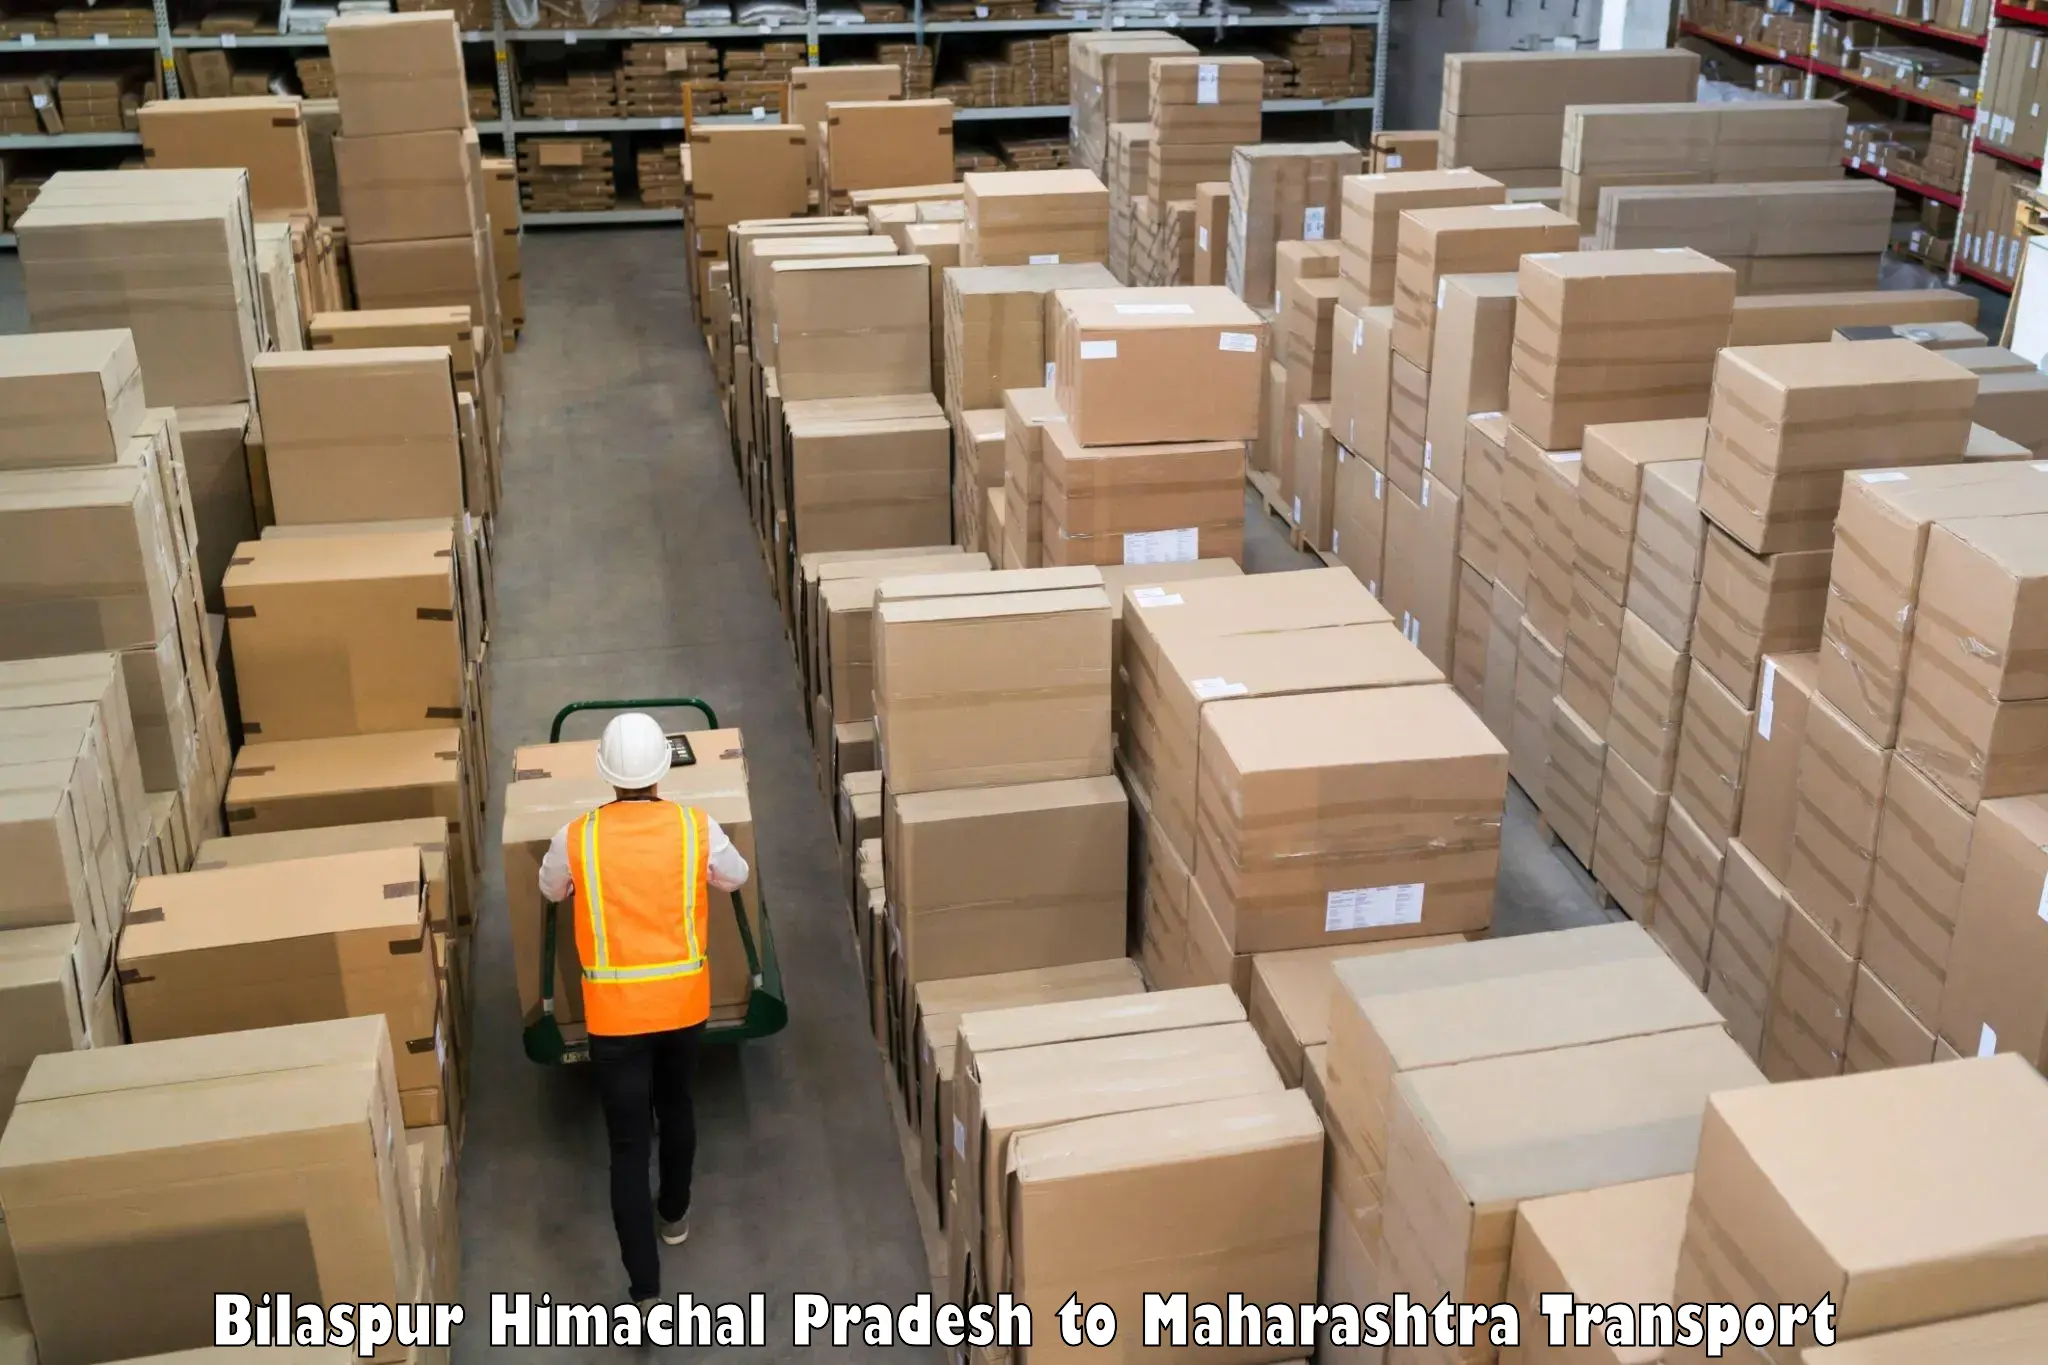 Delivery service Bilaspur Himachal Pradesh to Ballarpur